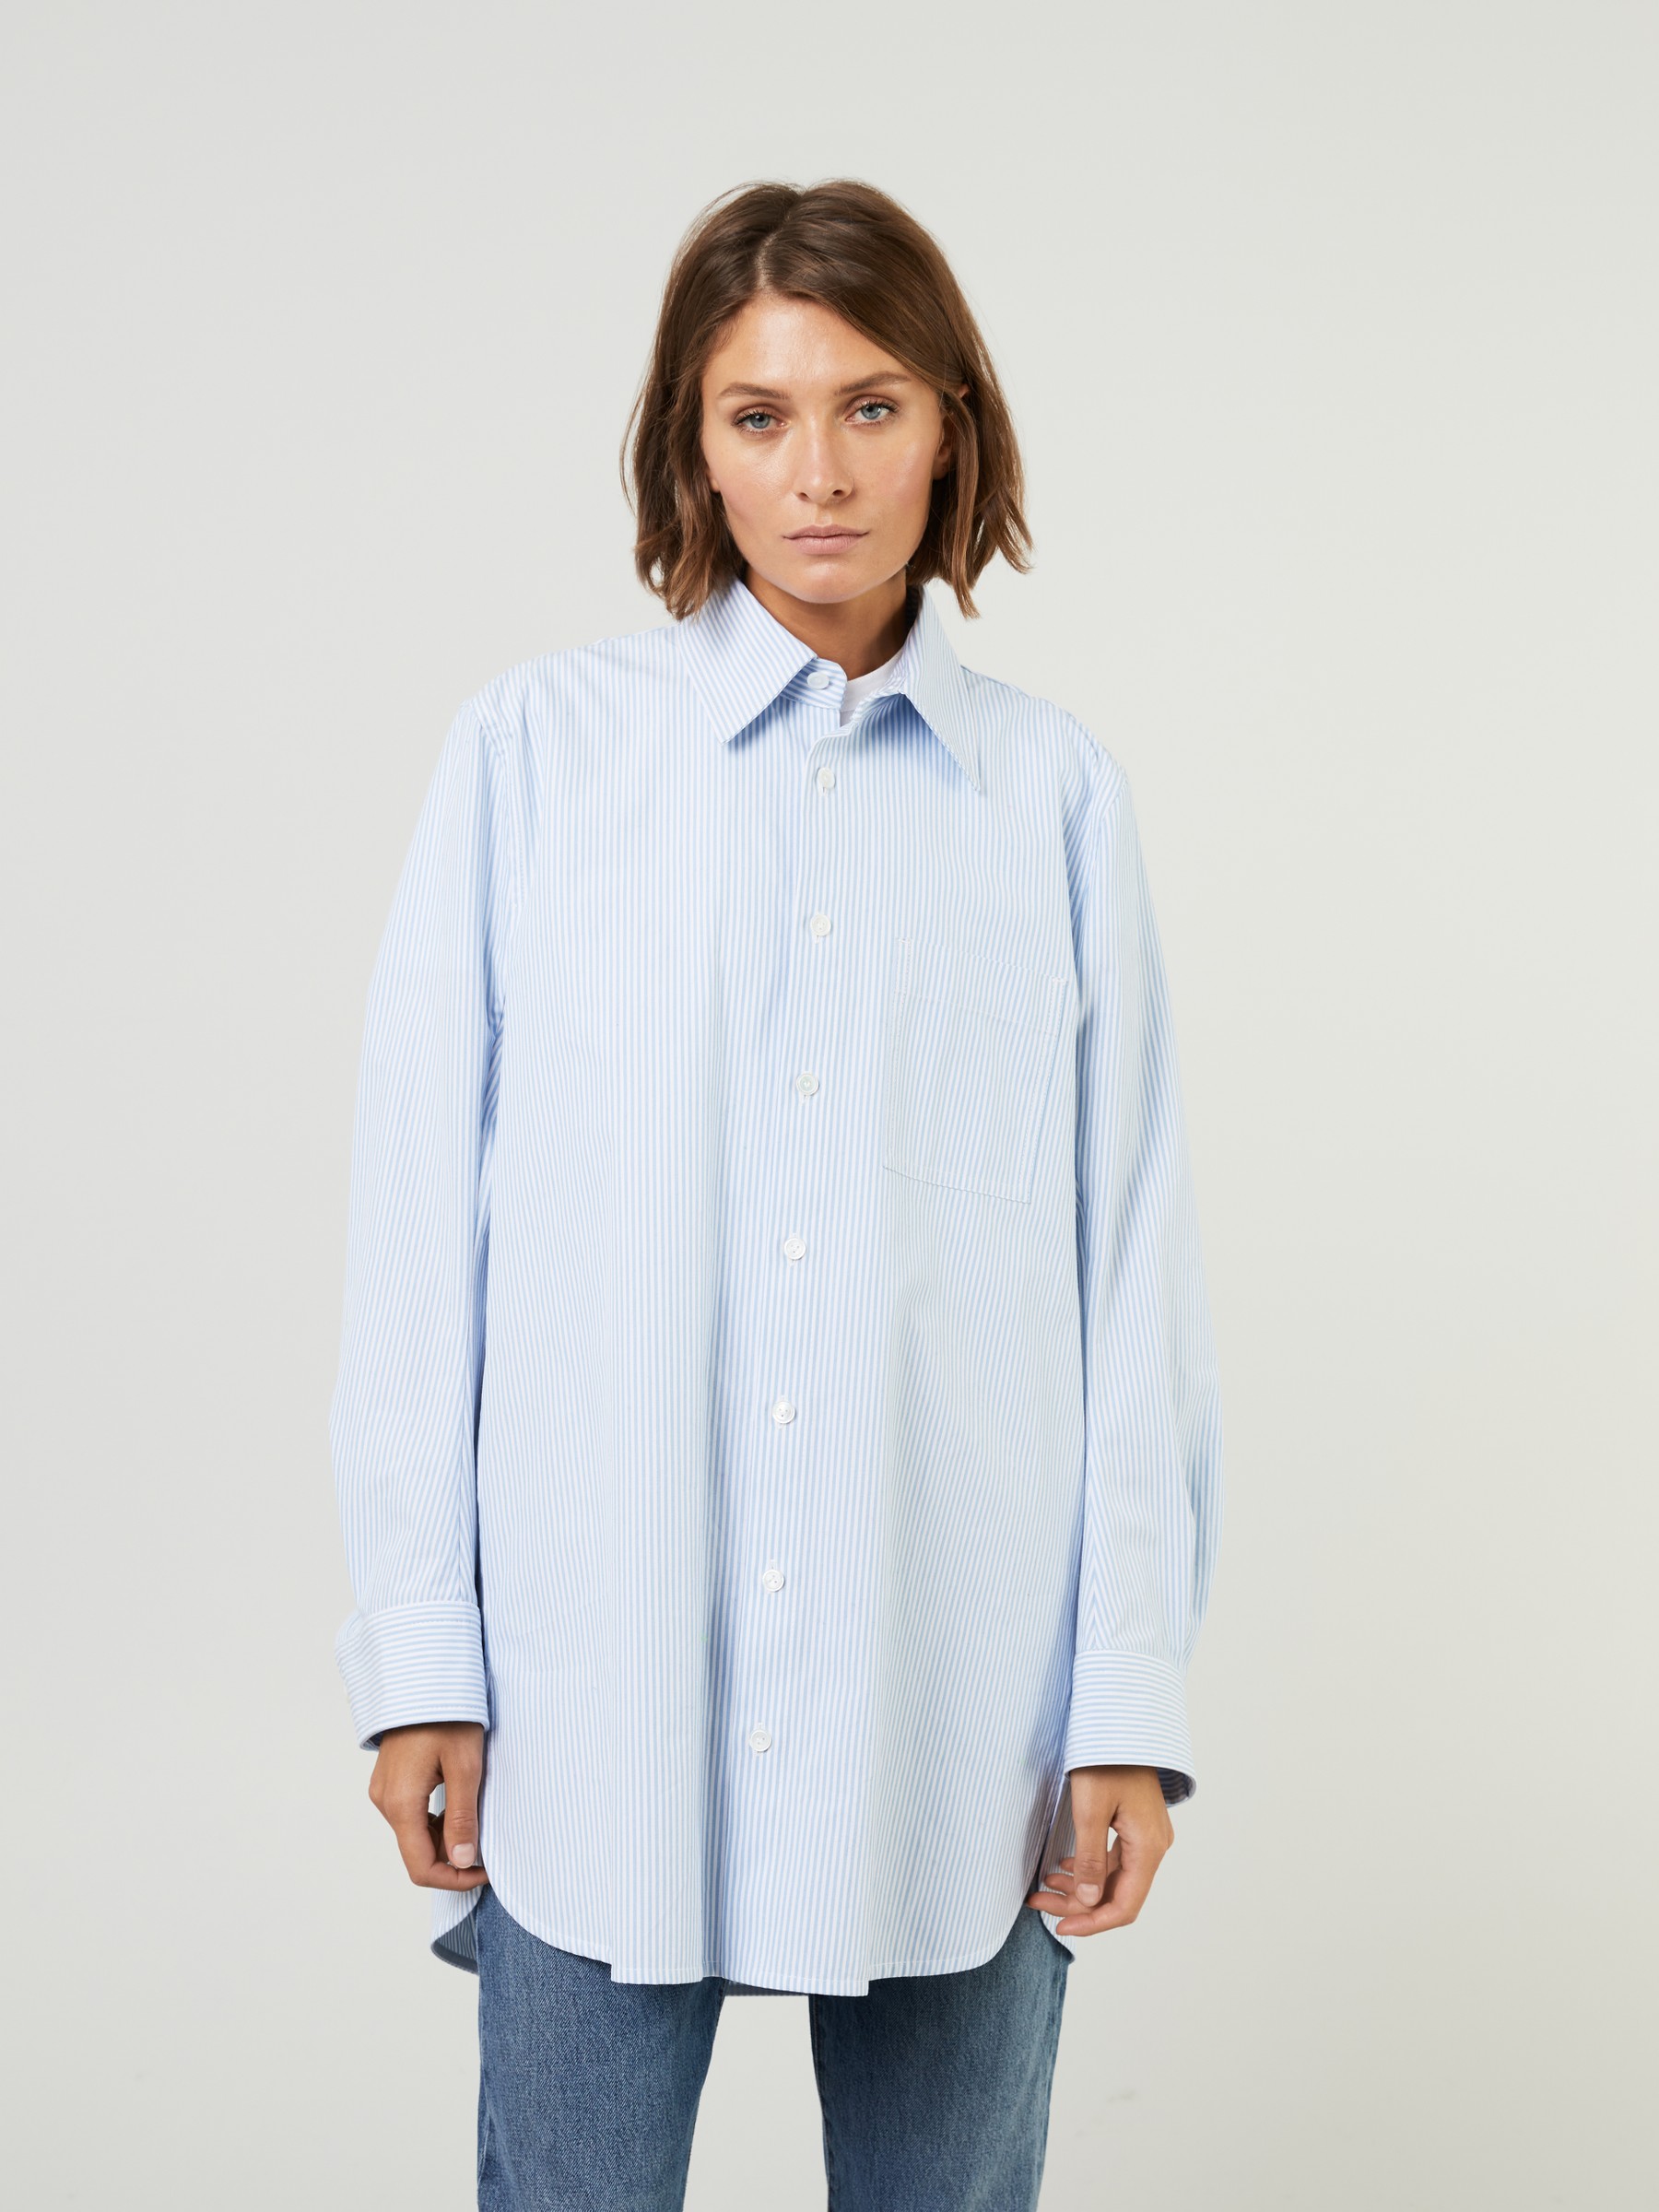 Bottega Veneta Cotton shirt light blue | Bottega Veneta